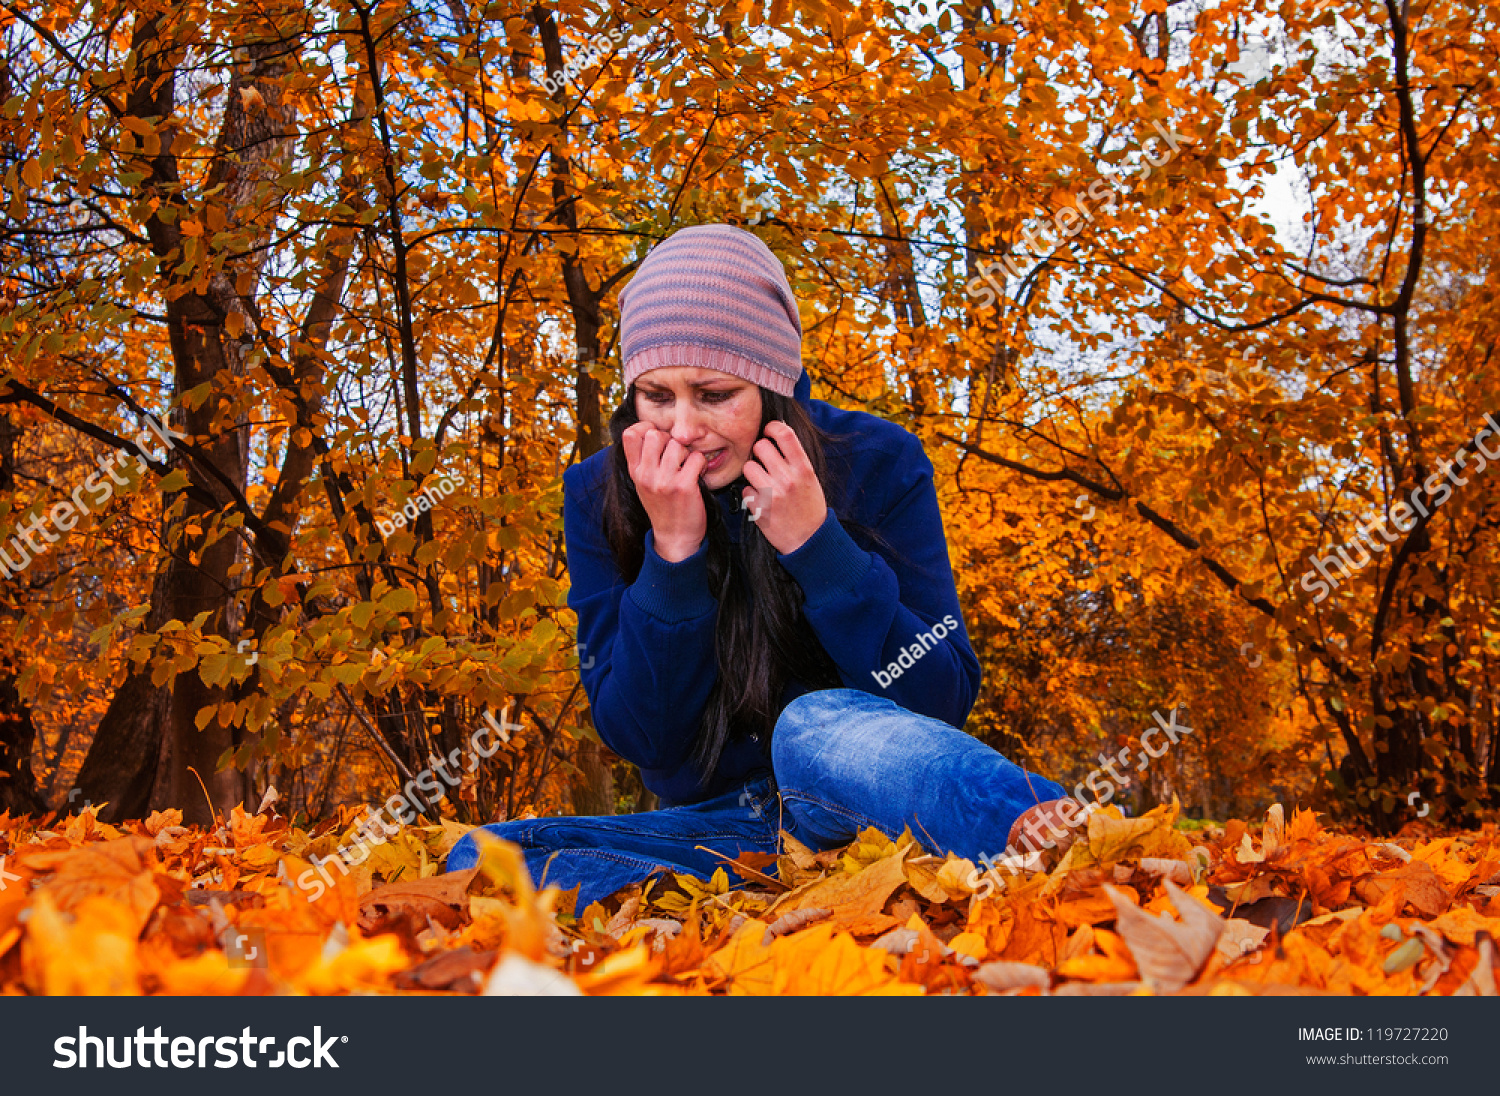 Crying Girl On Fallen Leaves Stock Photo 119727220 | Shutterstock